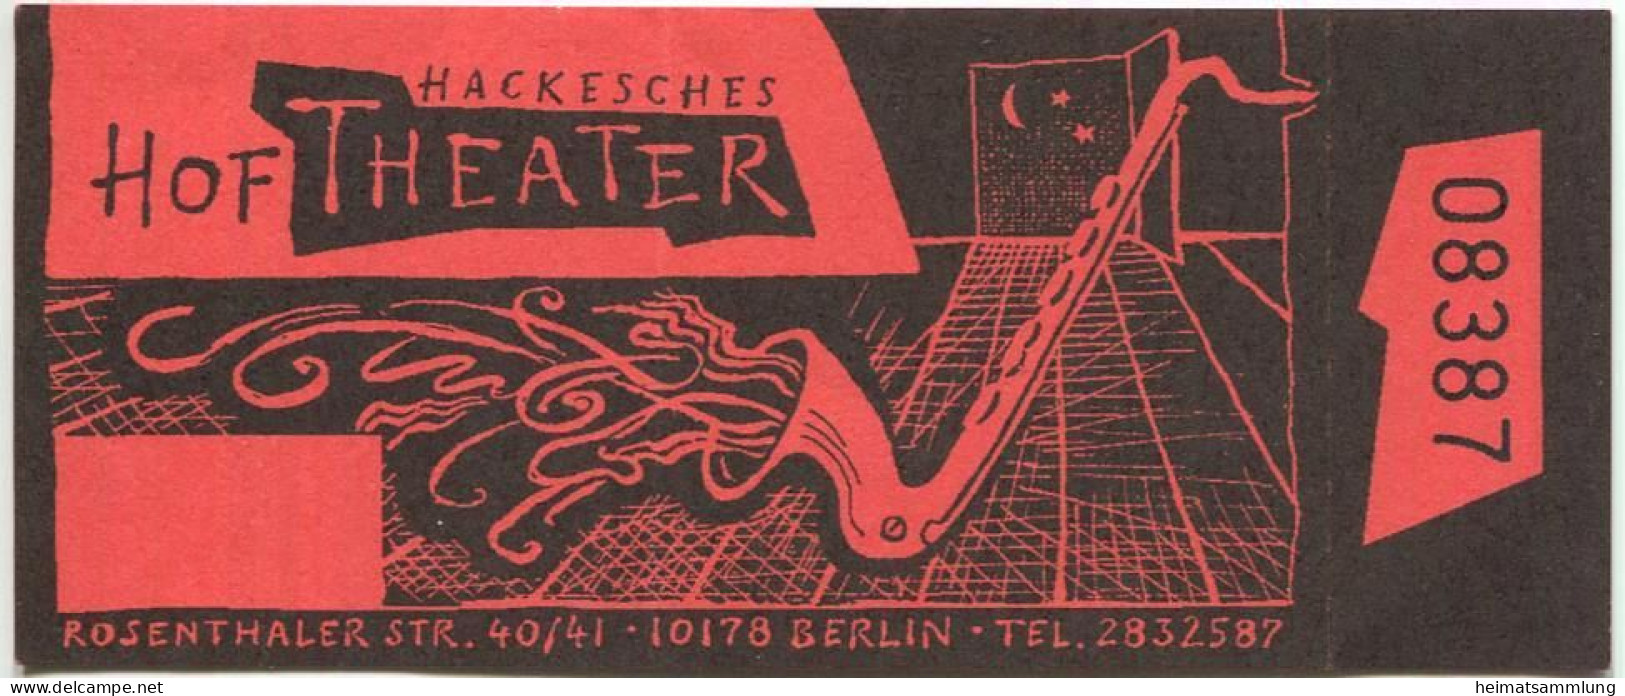 Deutschland - Berlin - Hackesches Hof Theater - Rosenthaler Str. 40/41 - Eintrittskarte - Toegangskaarten